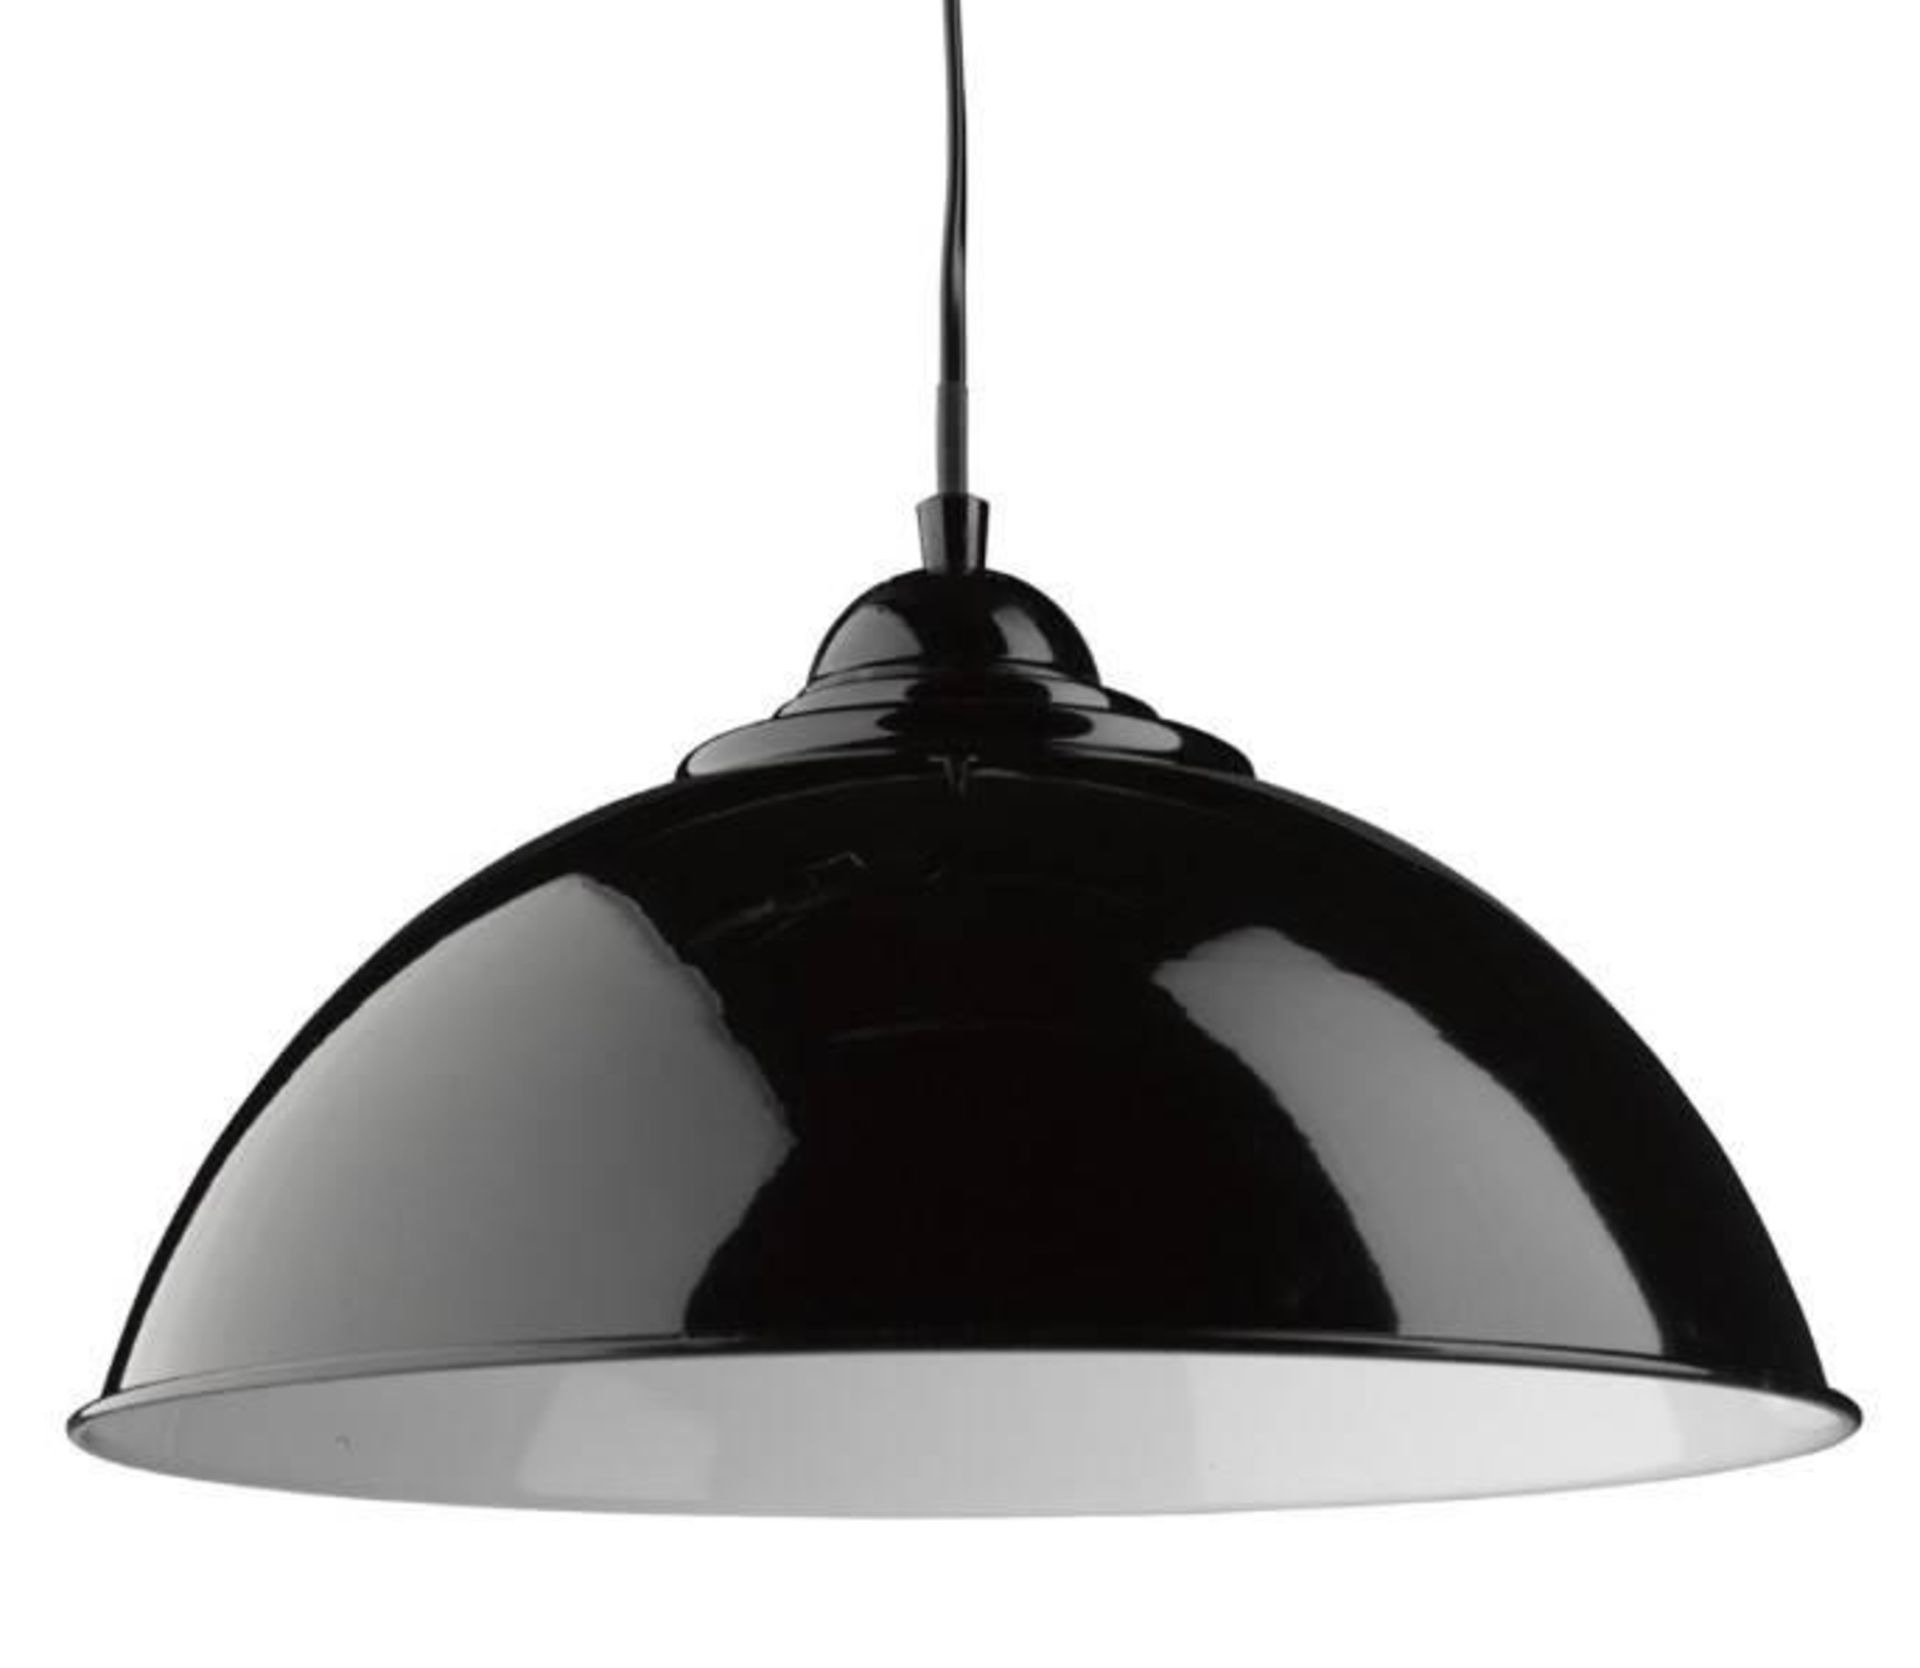 1 x SANFORD Black Half Dome Metal Pendant Light With White Inner - 34cm Diameter - New Boxed Stock - - Image 2 of 2